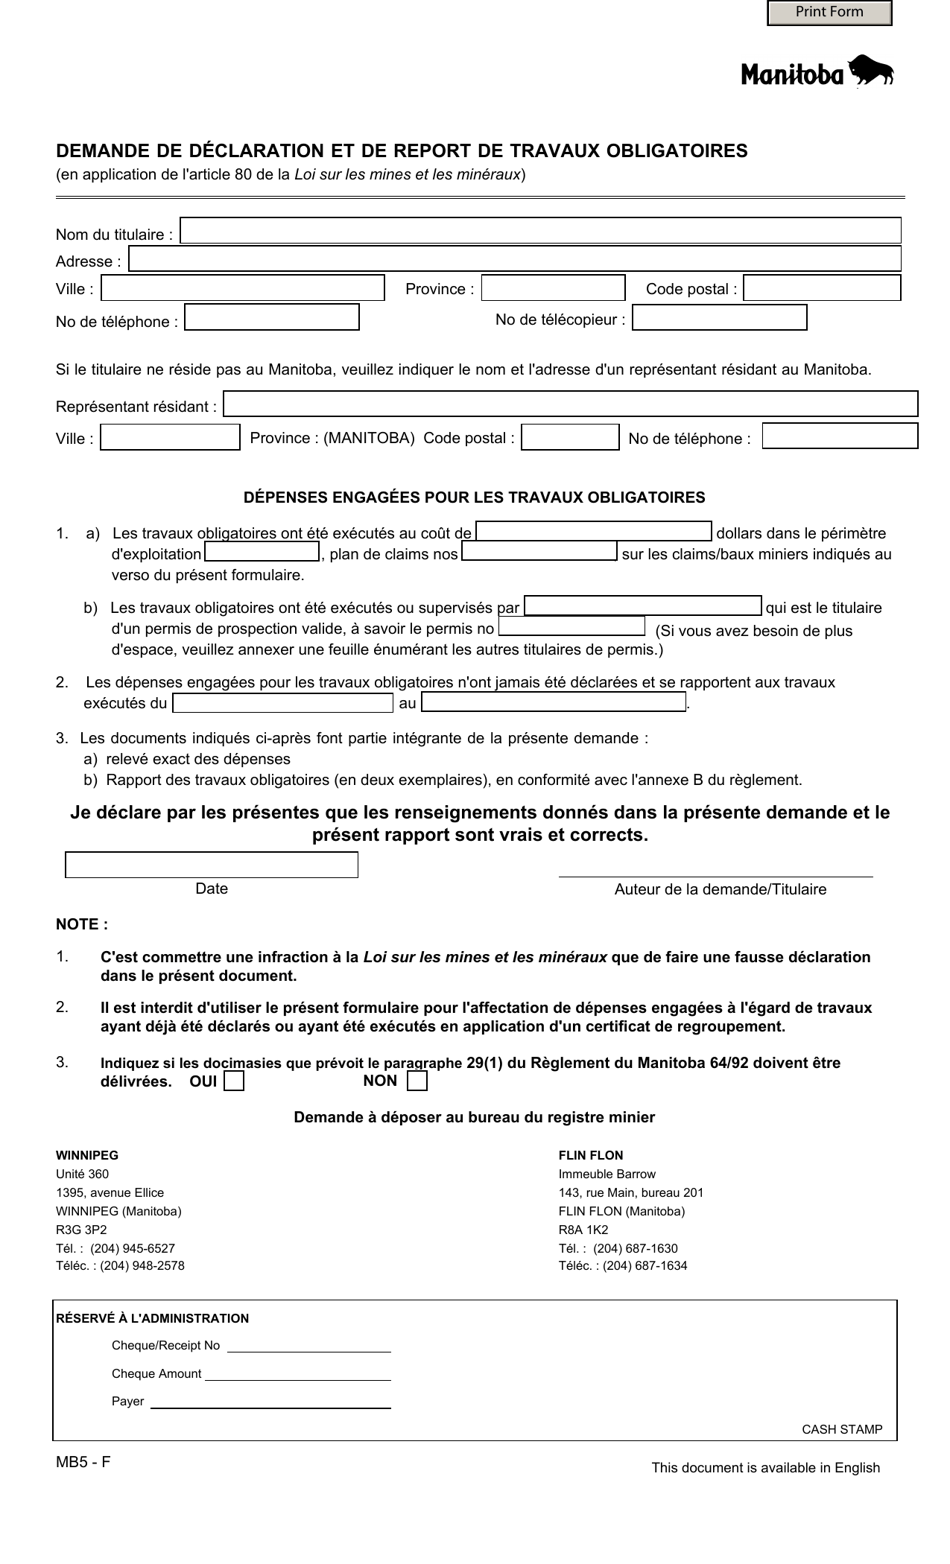 Forme MB5 Demande De Declaration Et De Report De Travaux Obligatoires - Manitoba, Canada (French), Page 1